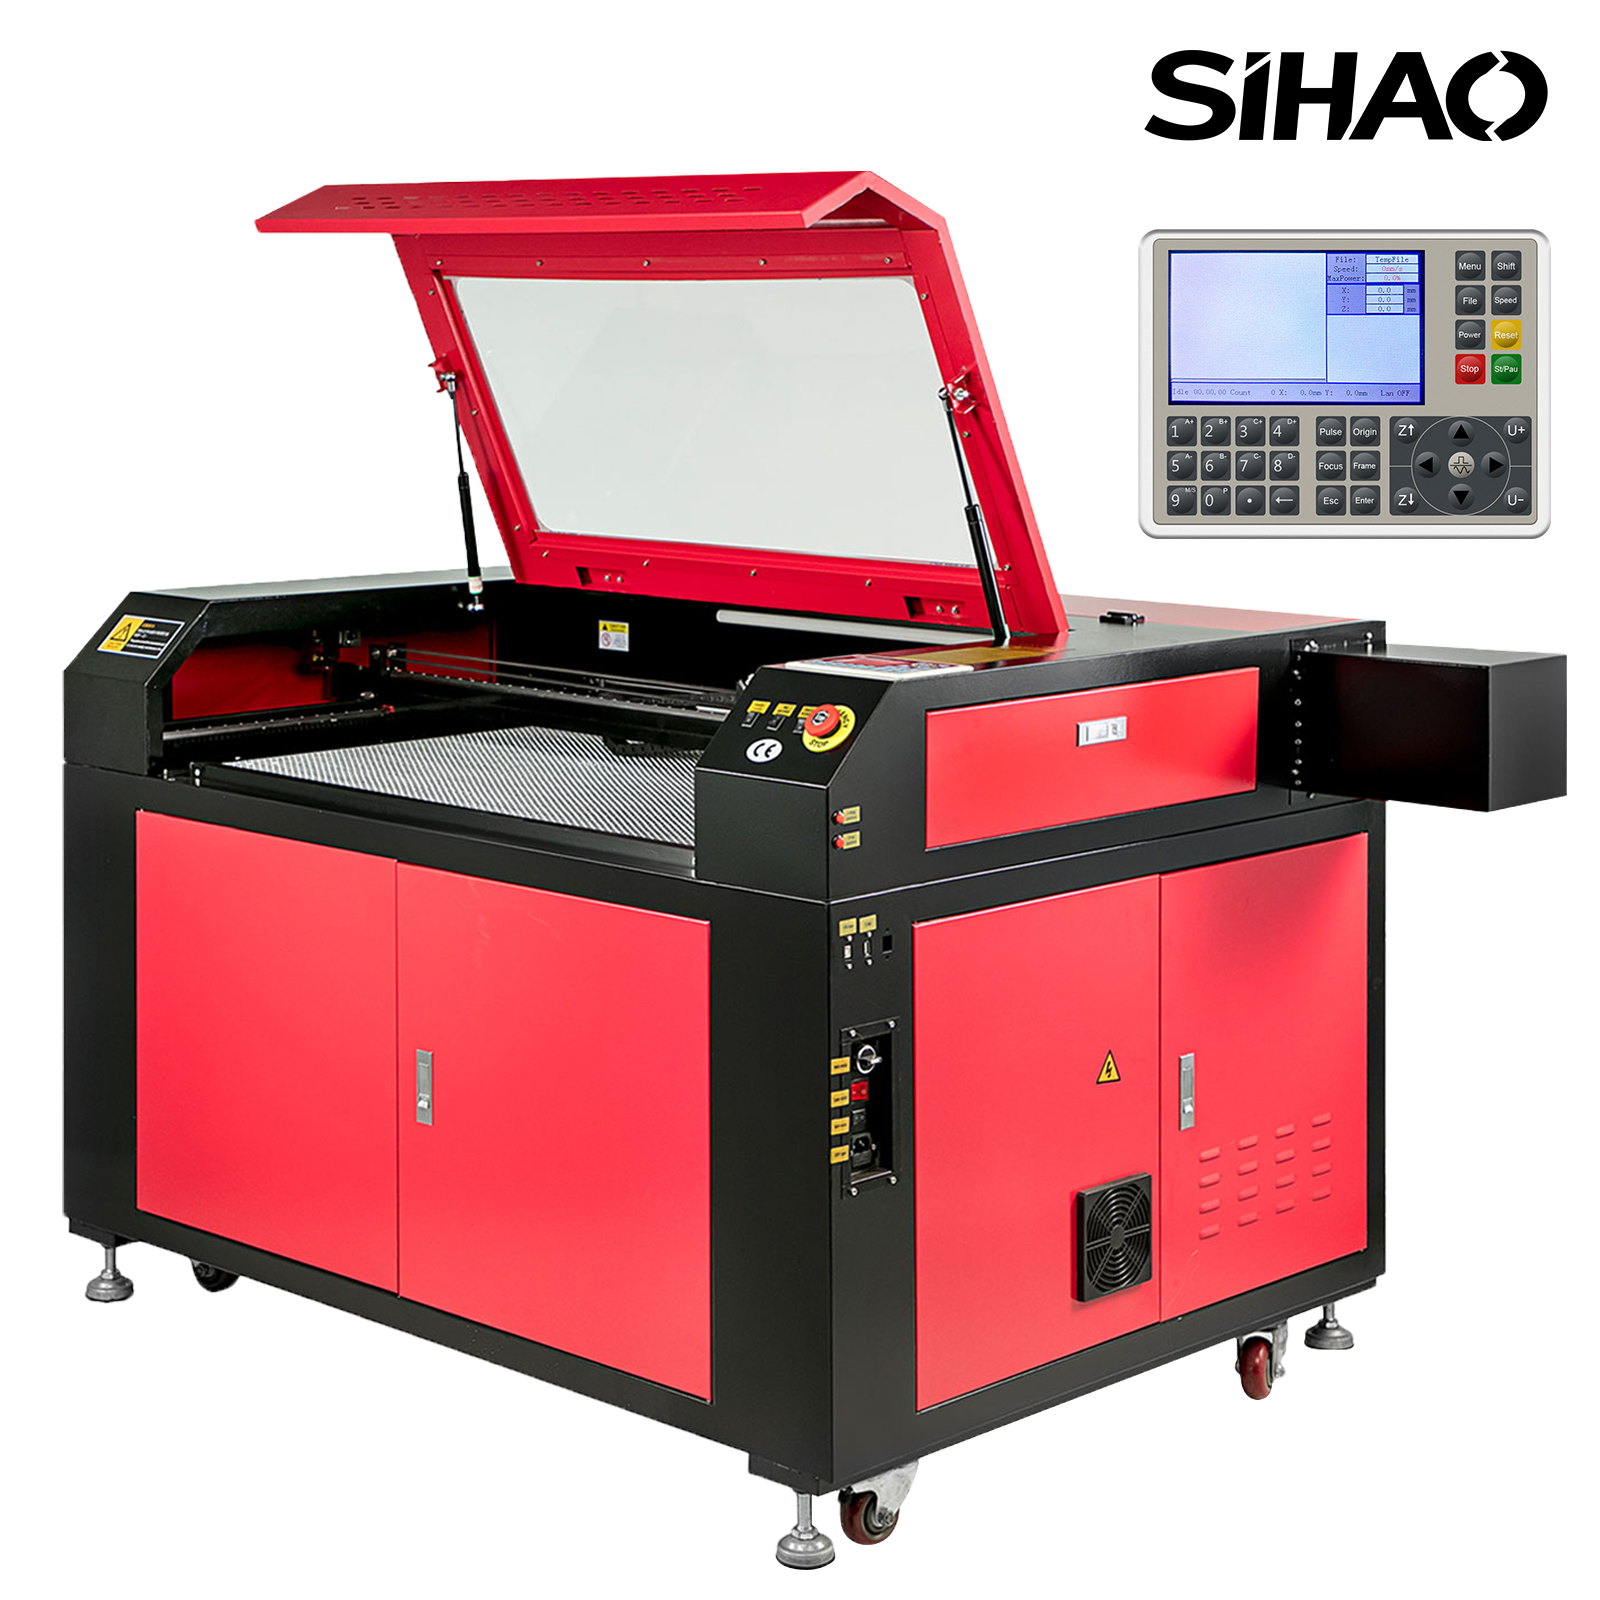 SIHAO 900X600MM 100W Laser Engraving Machine